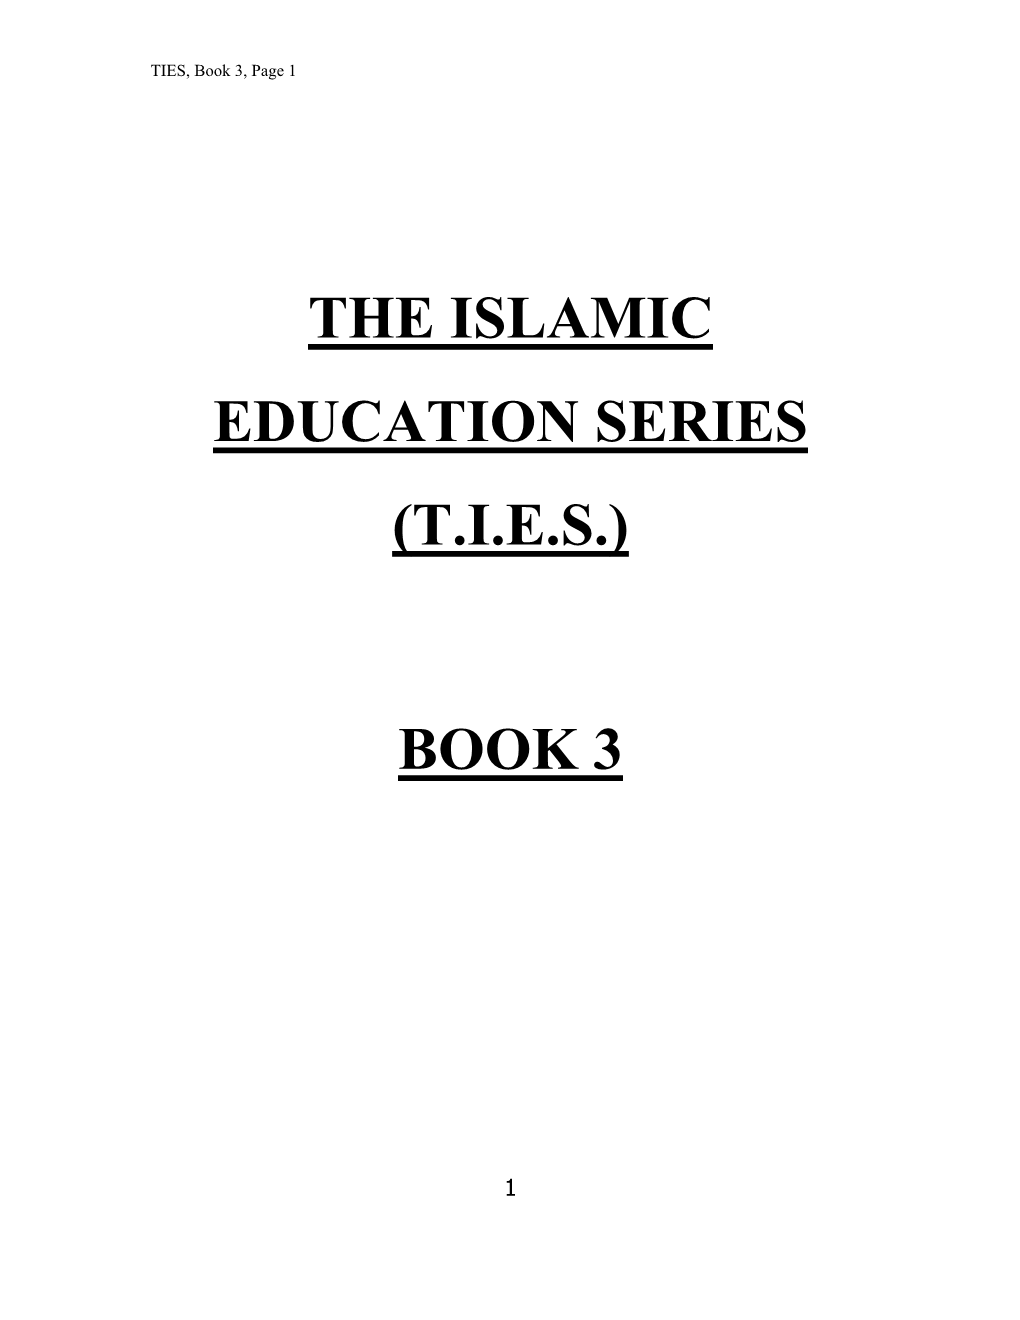 Islamic Education School Book 3